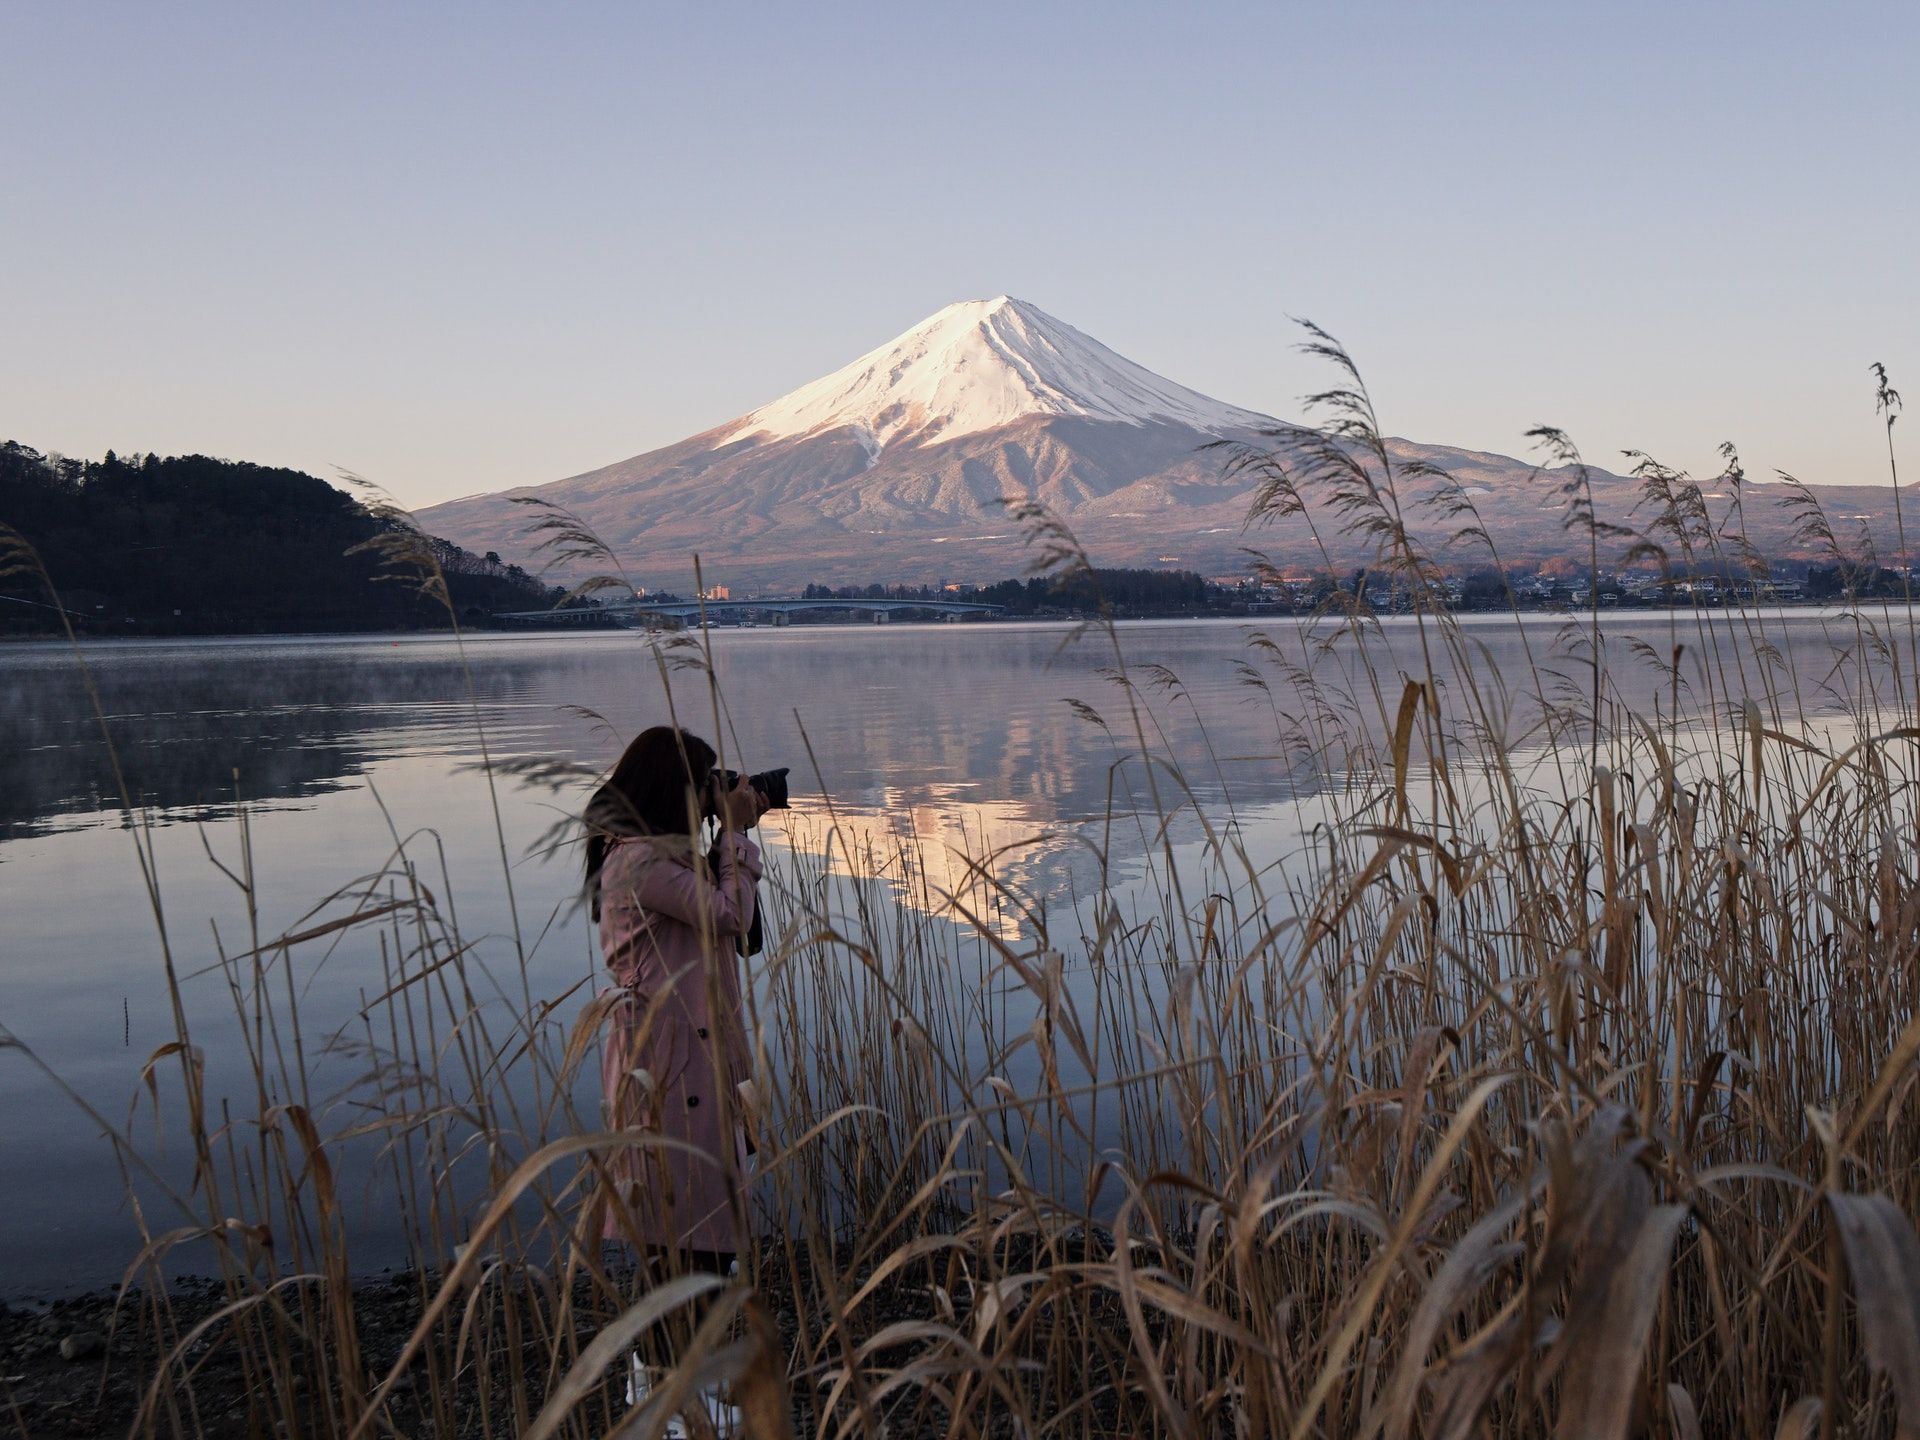 Photogarpher taking pictures near a mountain lake